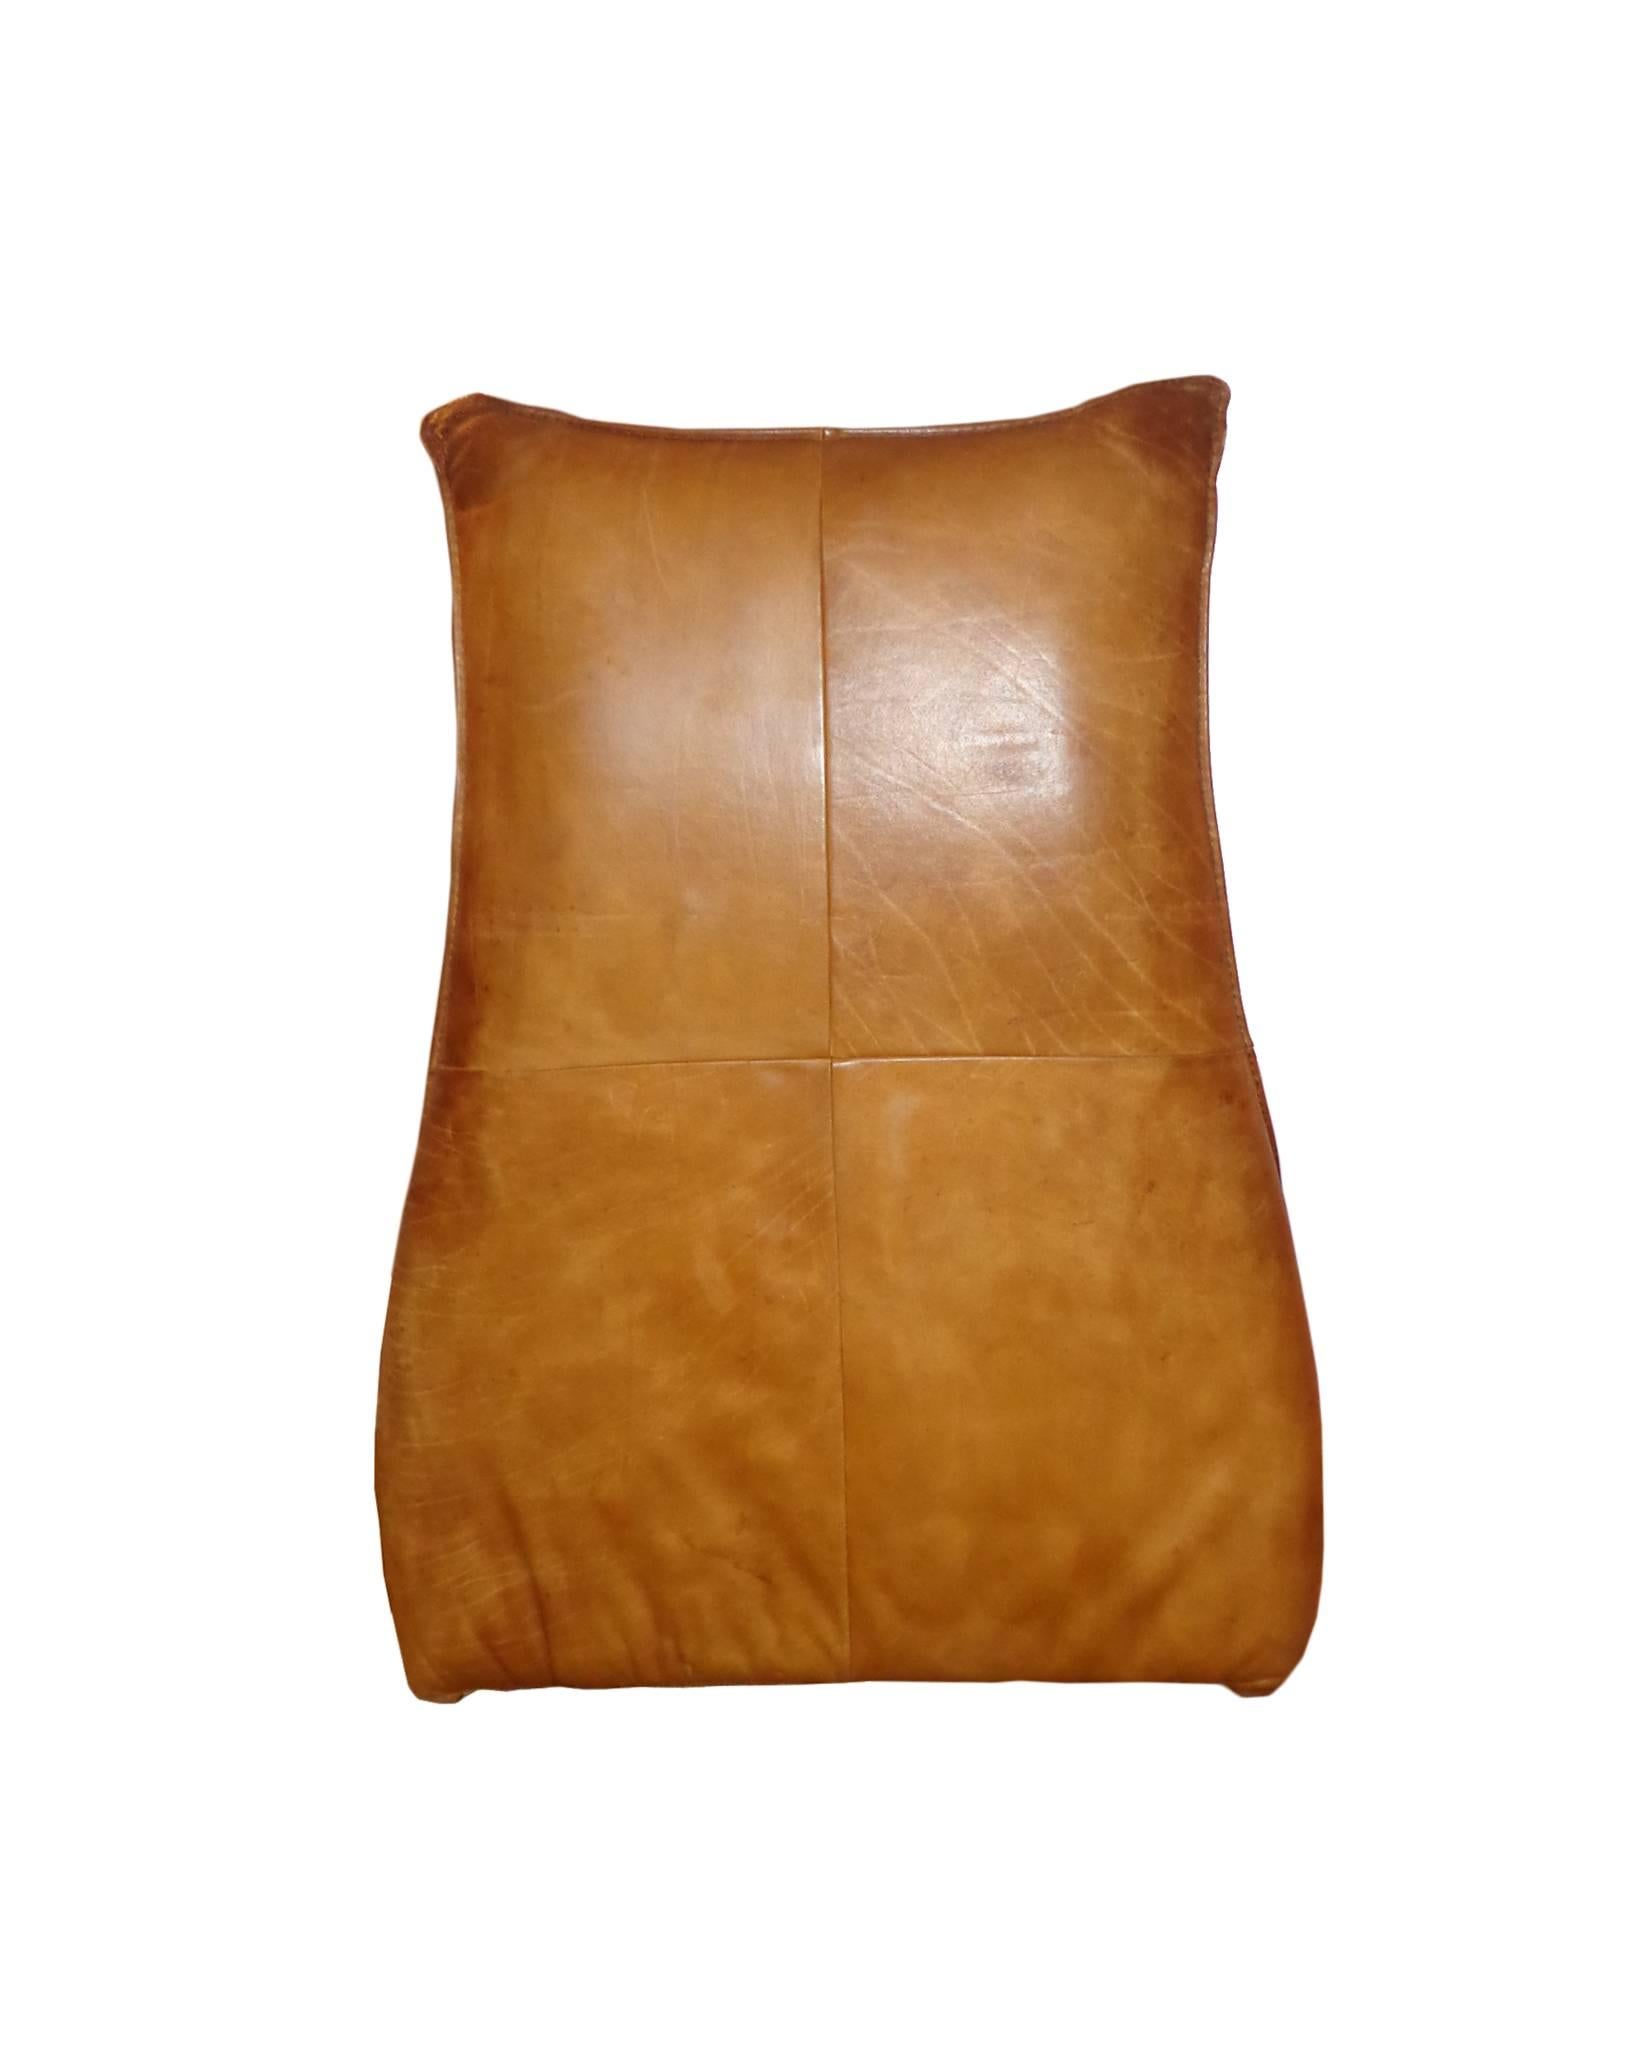 Lounge Club Chair in Cognac Leather by Gerard Van Den Berg for Montis 1970 Dutch 1